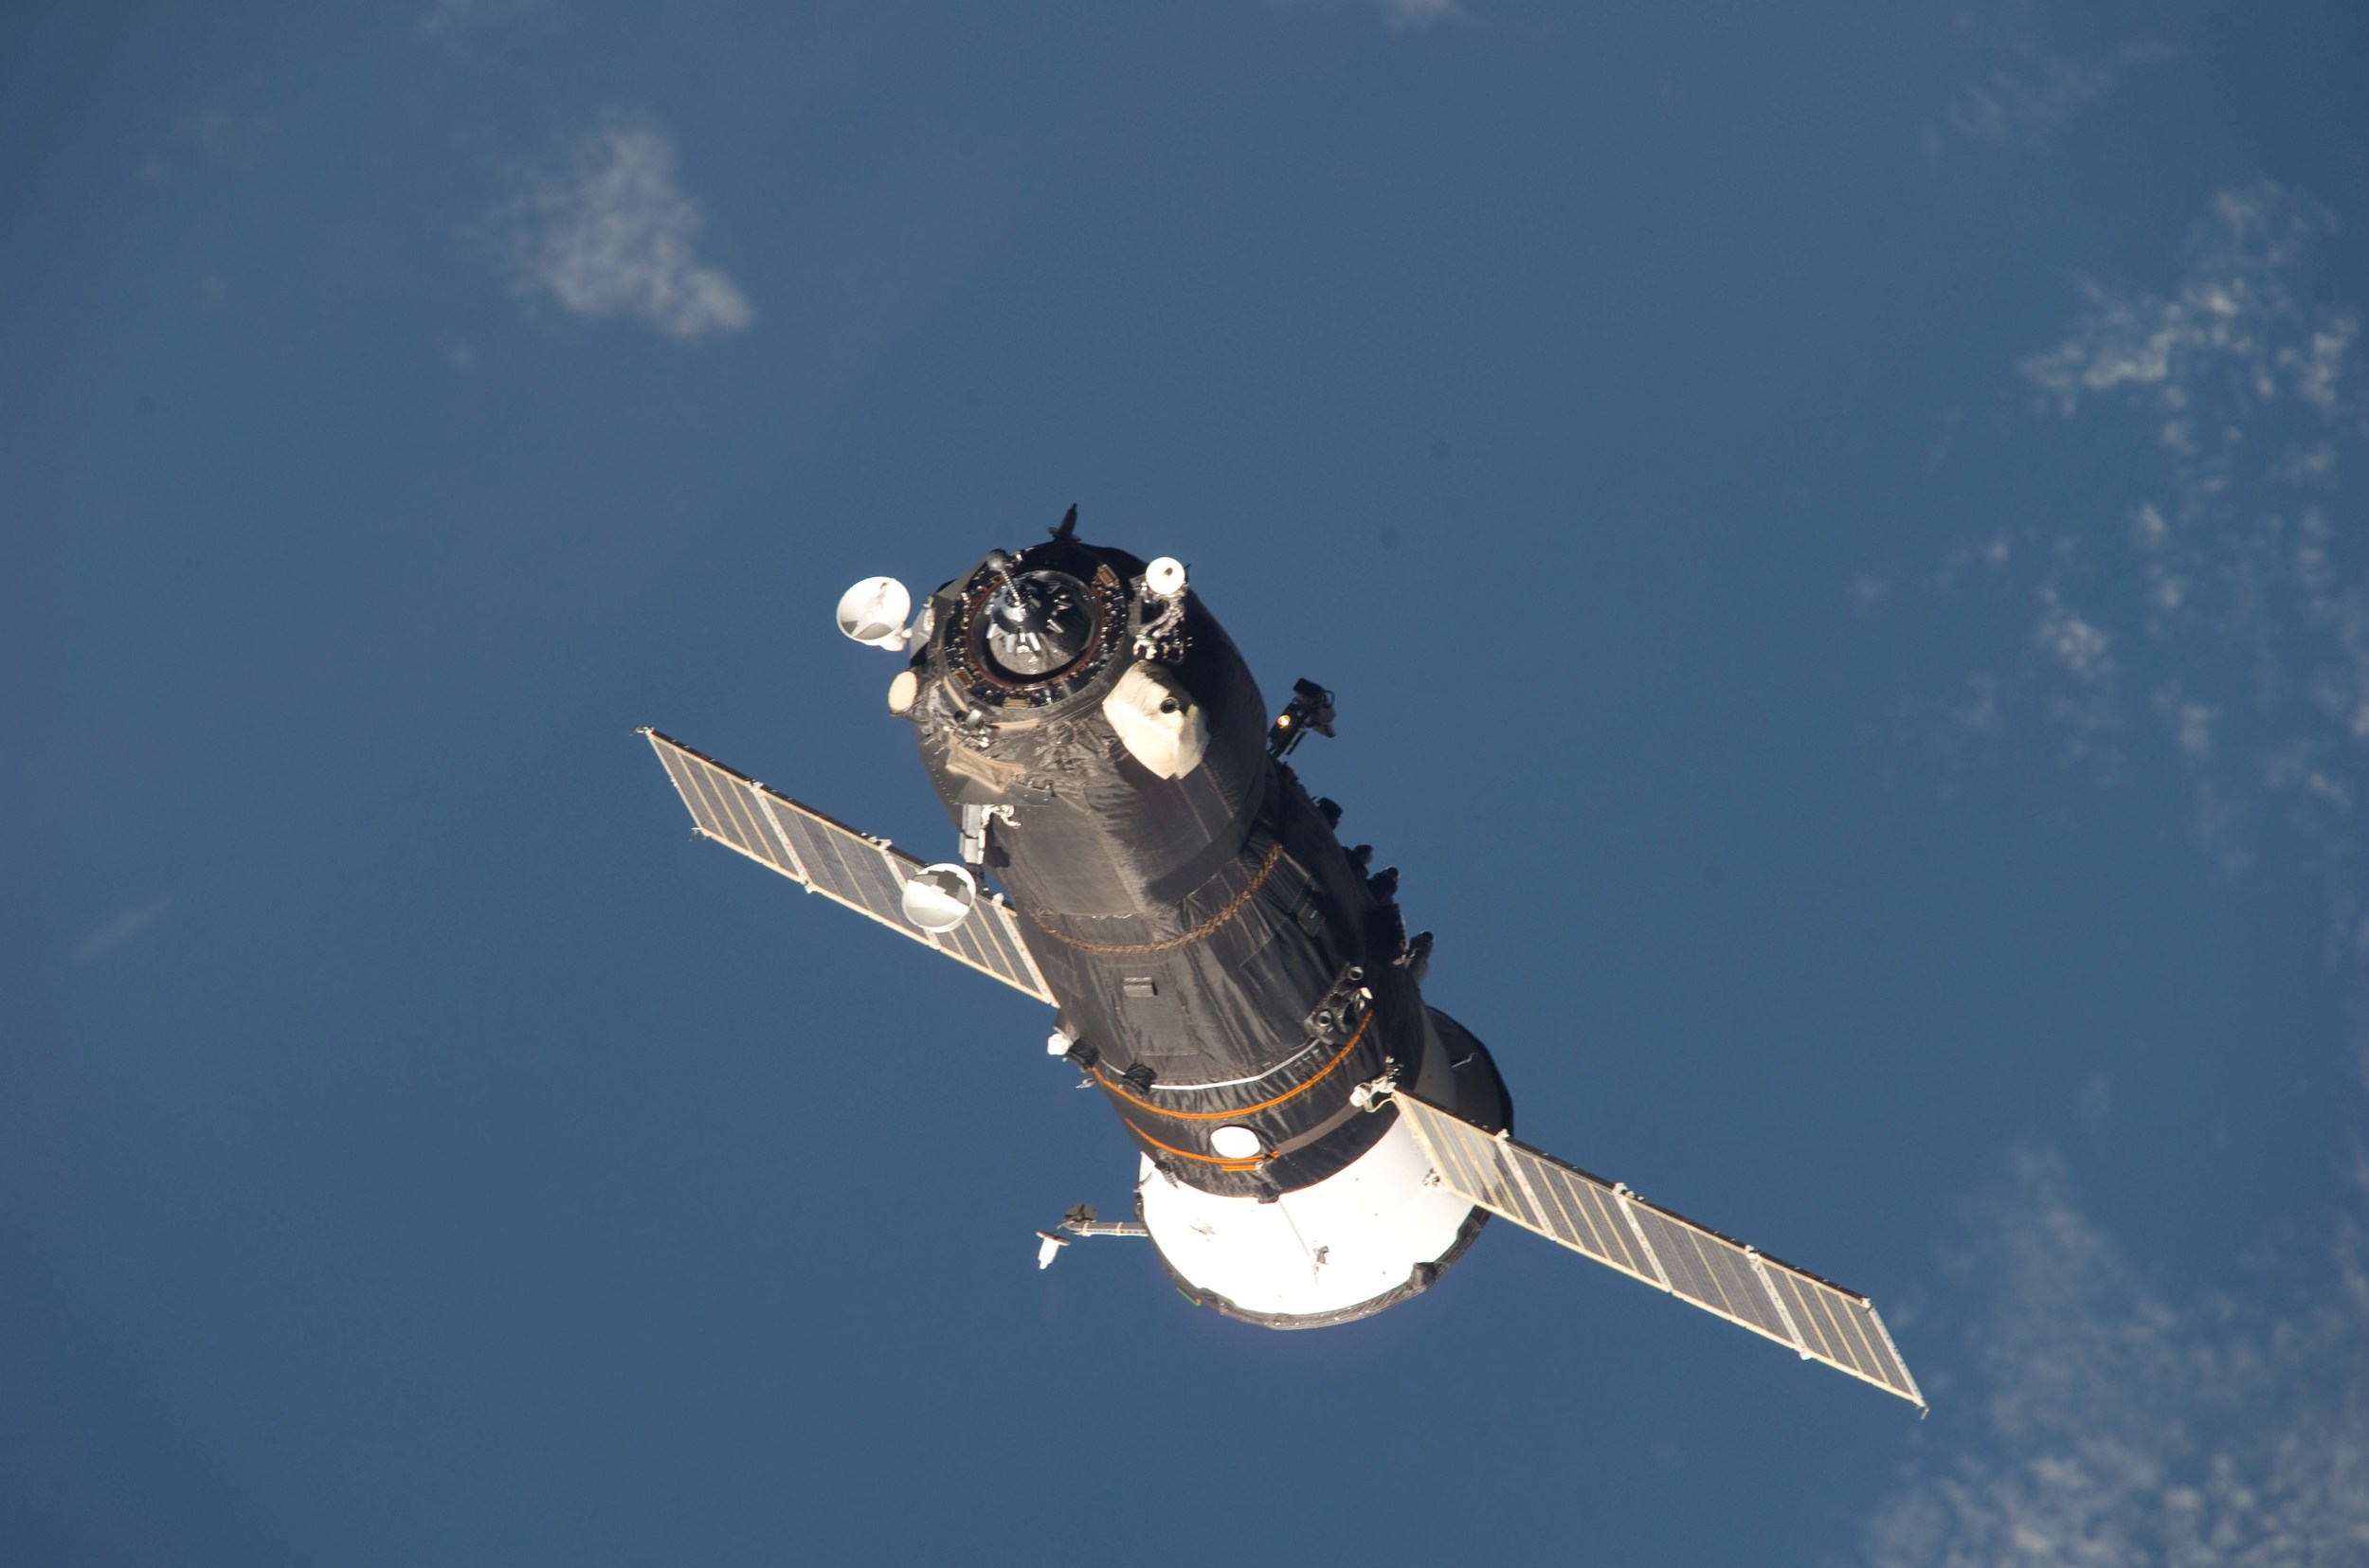  A Progress departing the International Space Station. Photo Credit: NASA 